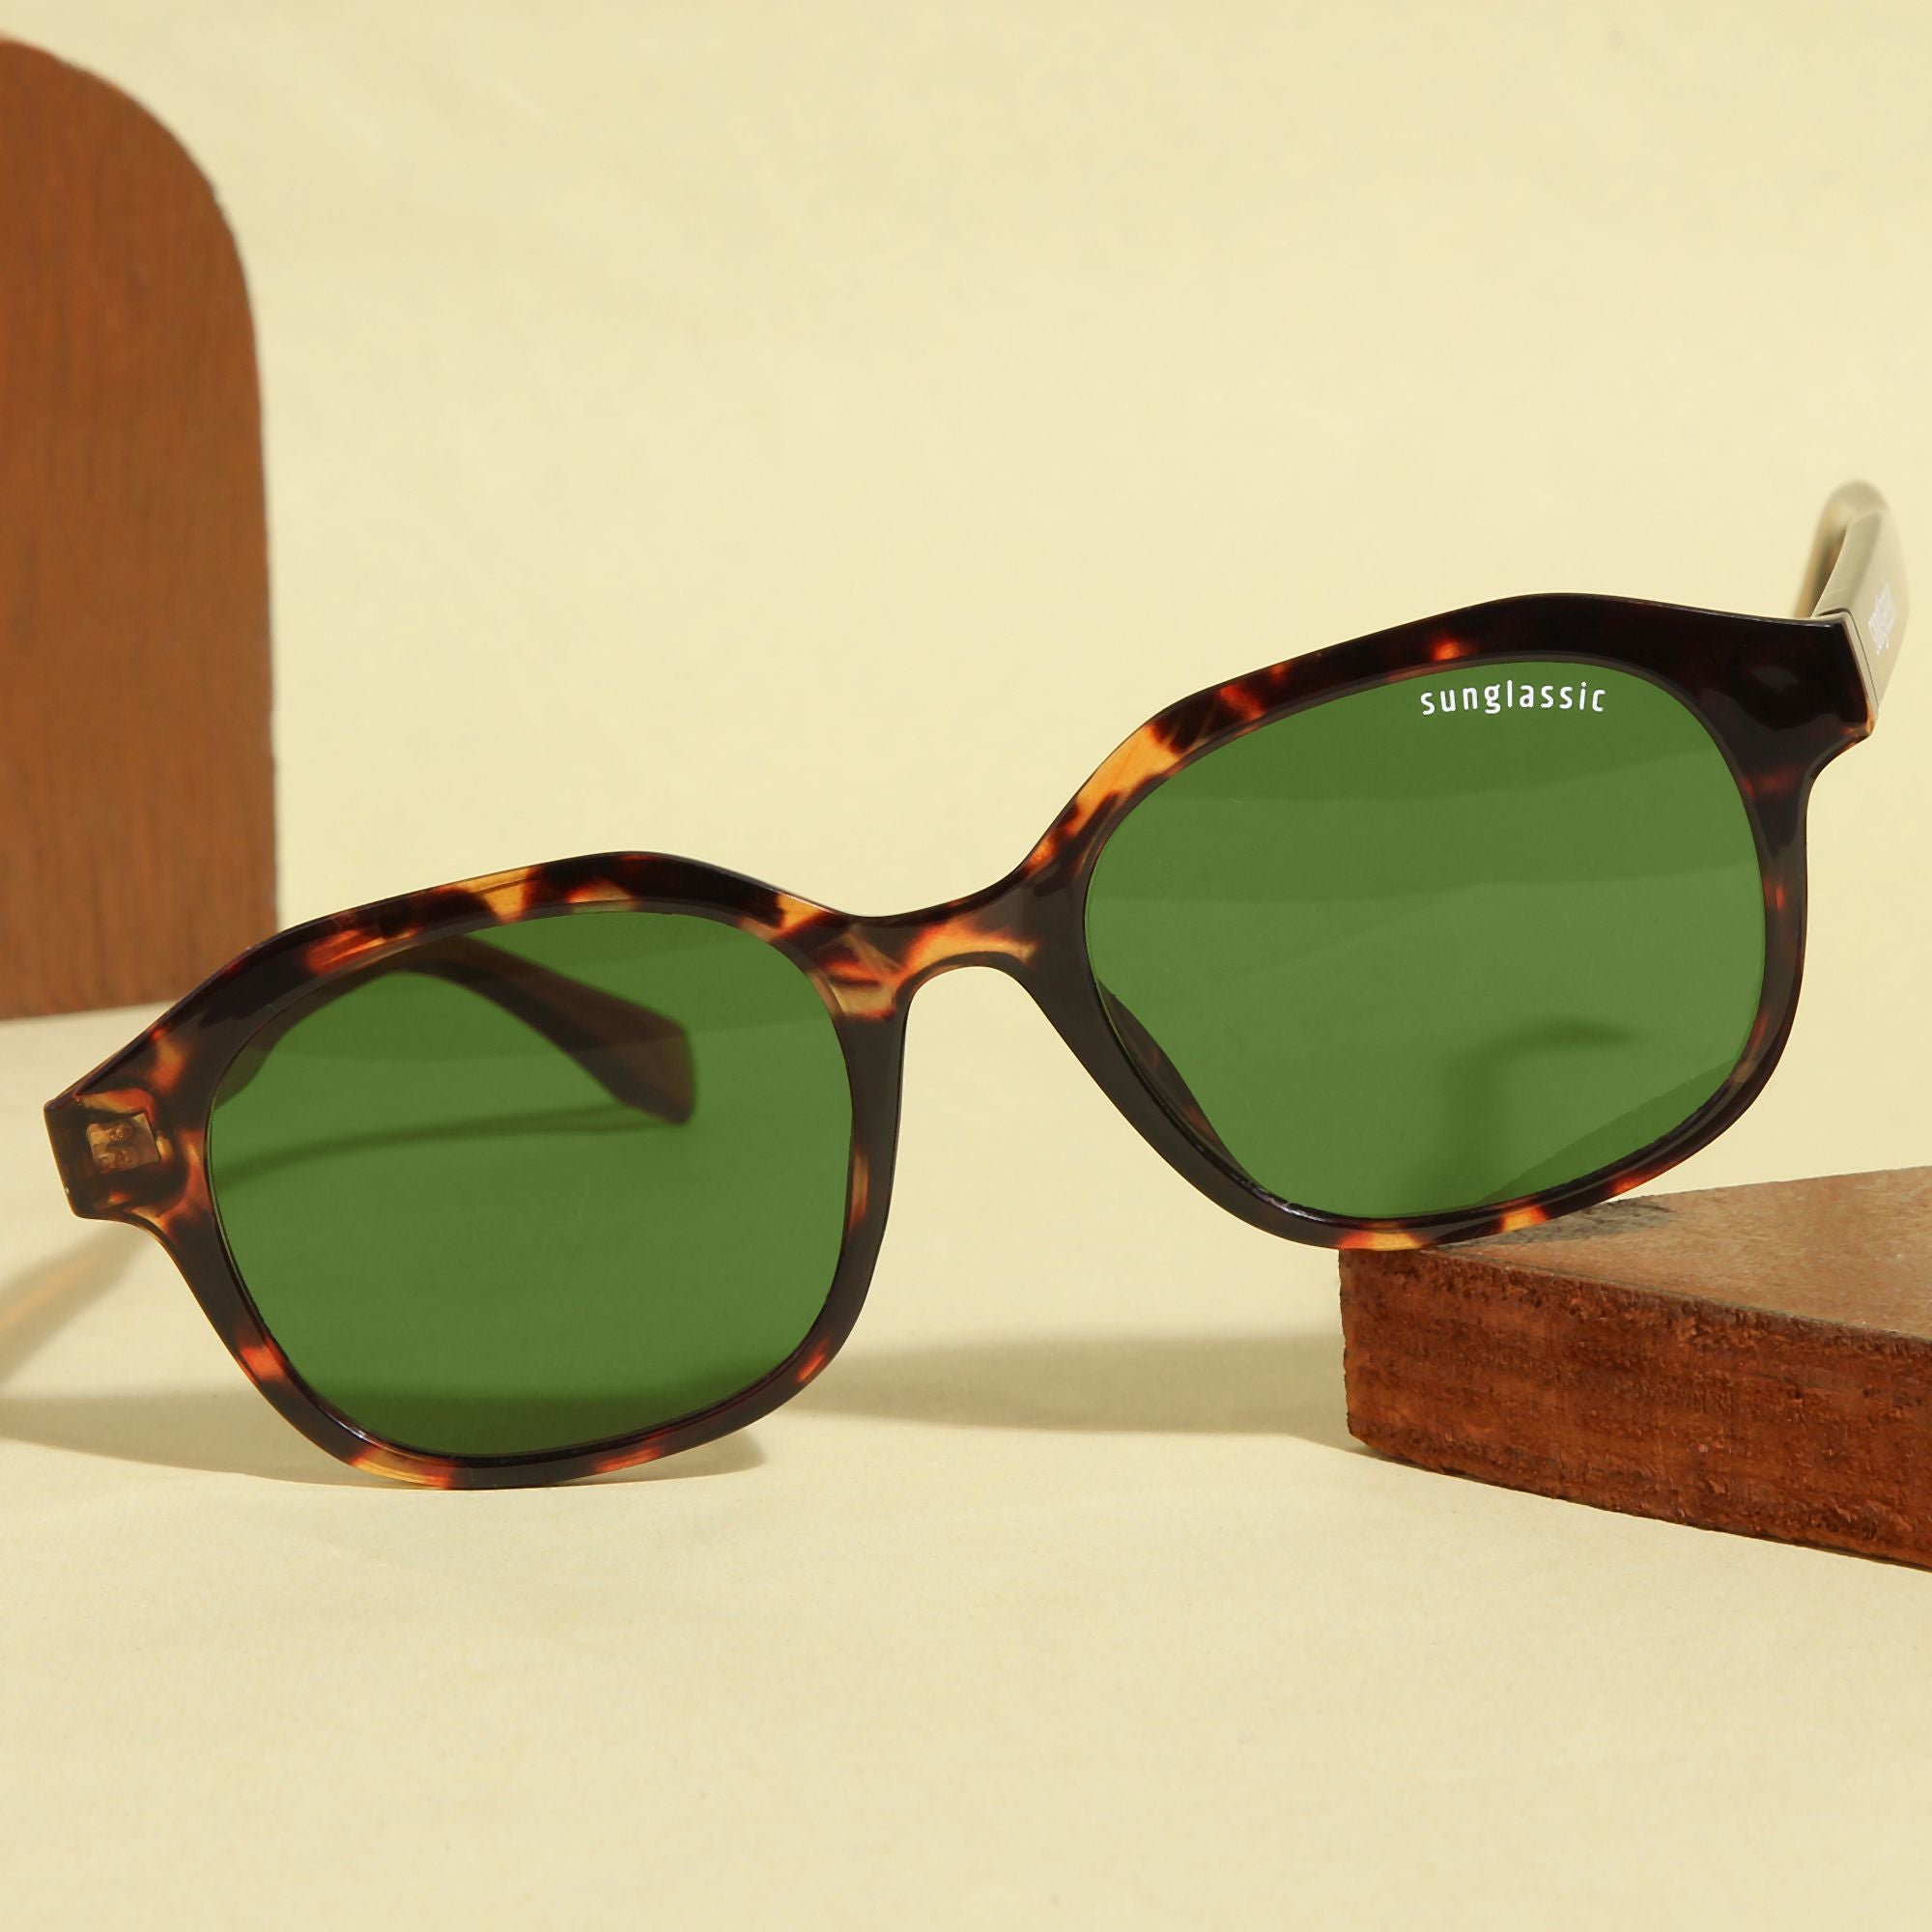 Crypto. Brown Tortoise Green Square Sunglasses